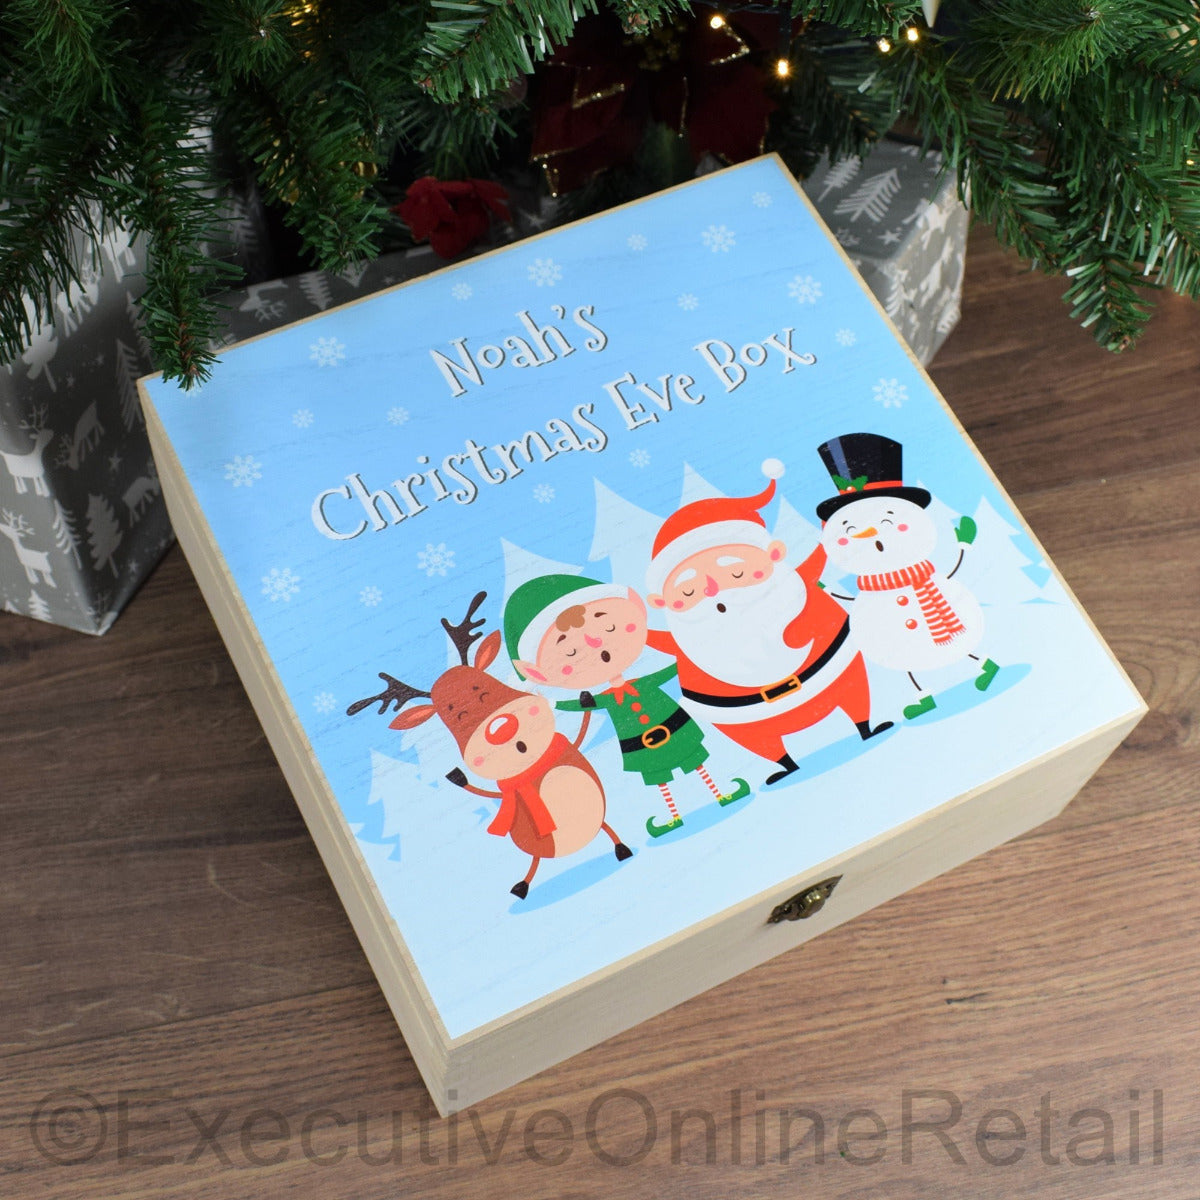 Personalised Printed Wooden Christmas Eve Box - Santa & Friends